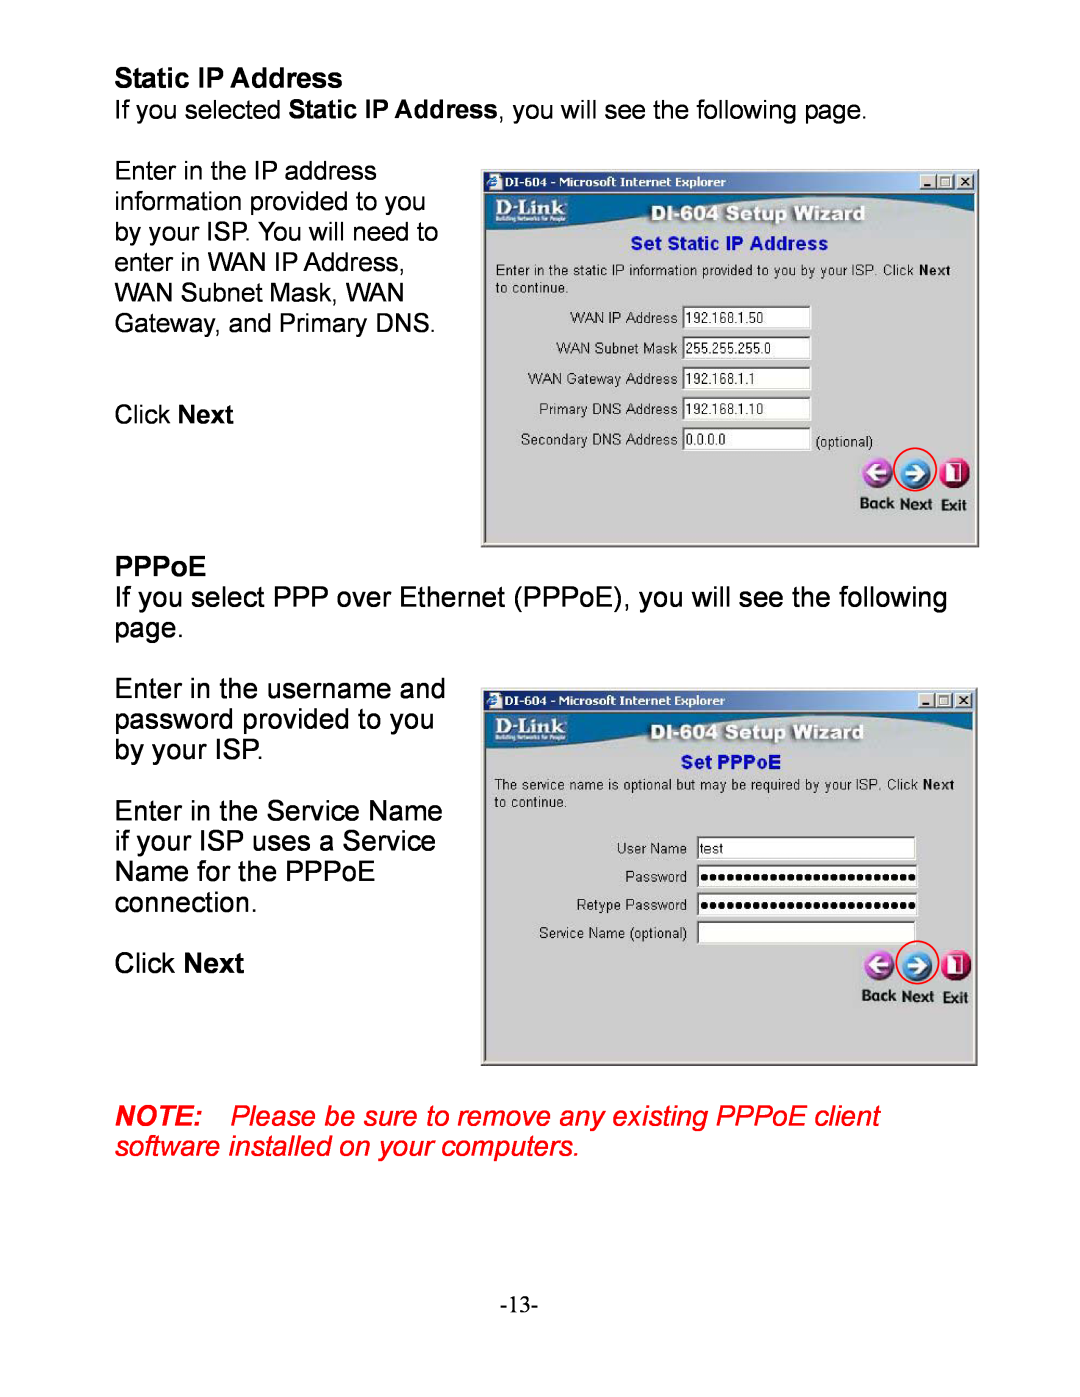 D-Link DI-604 manual Static IP Address, PPPoE 